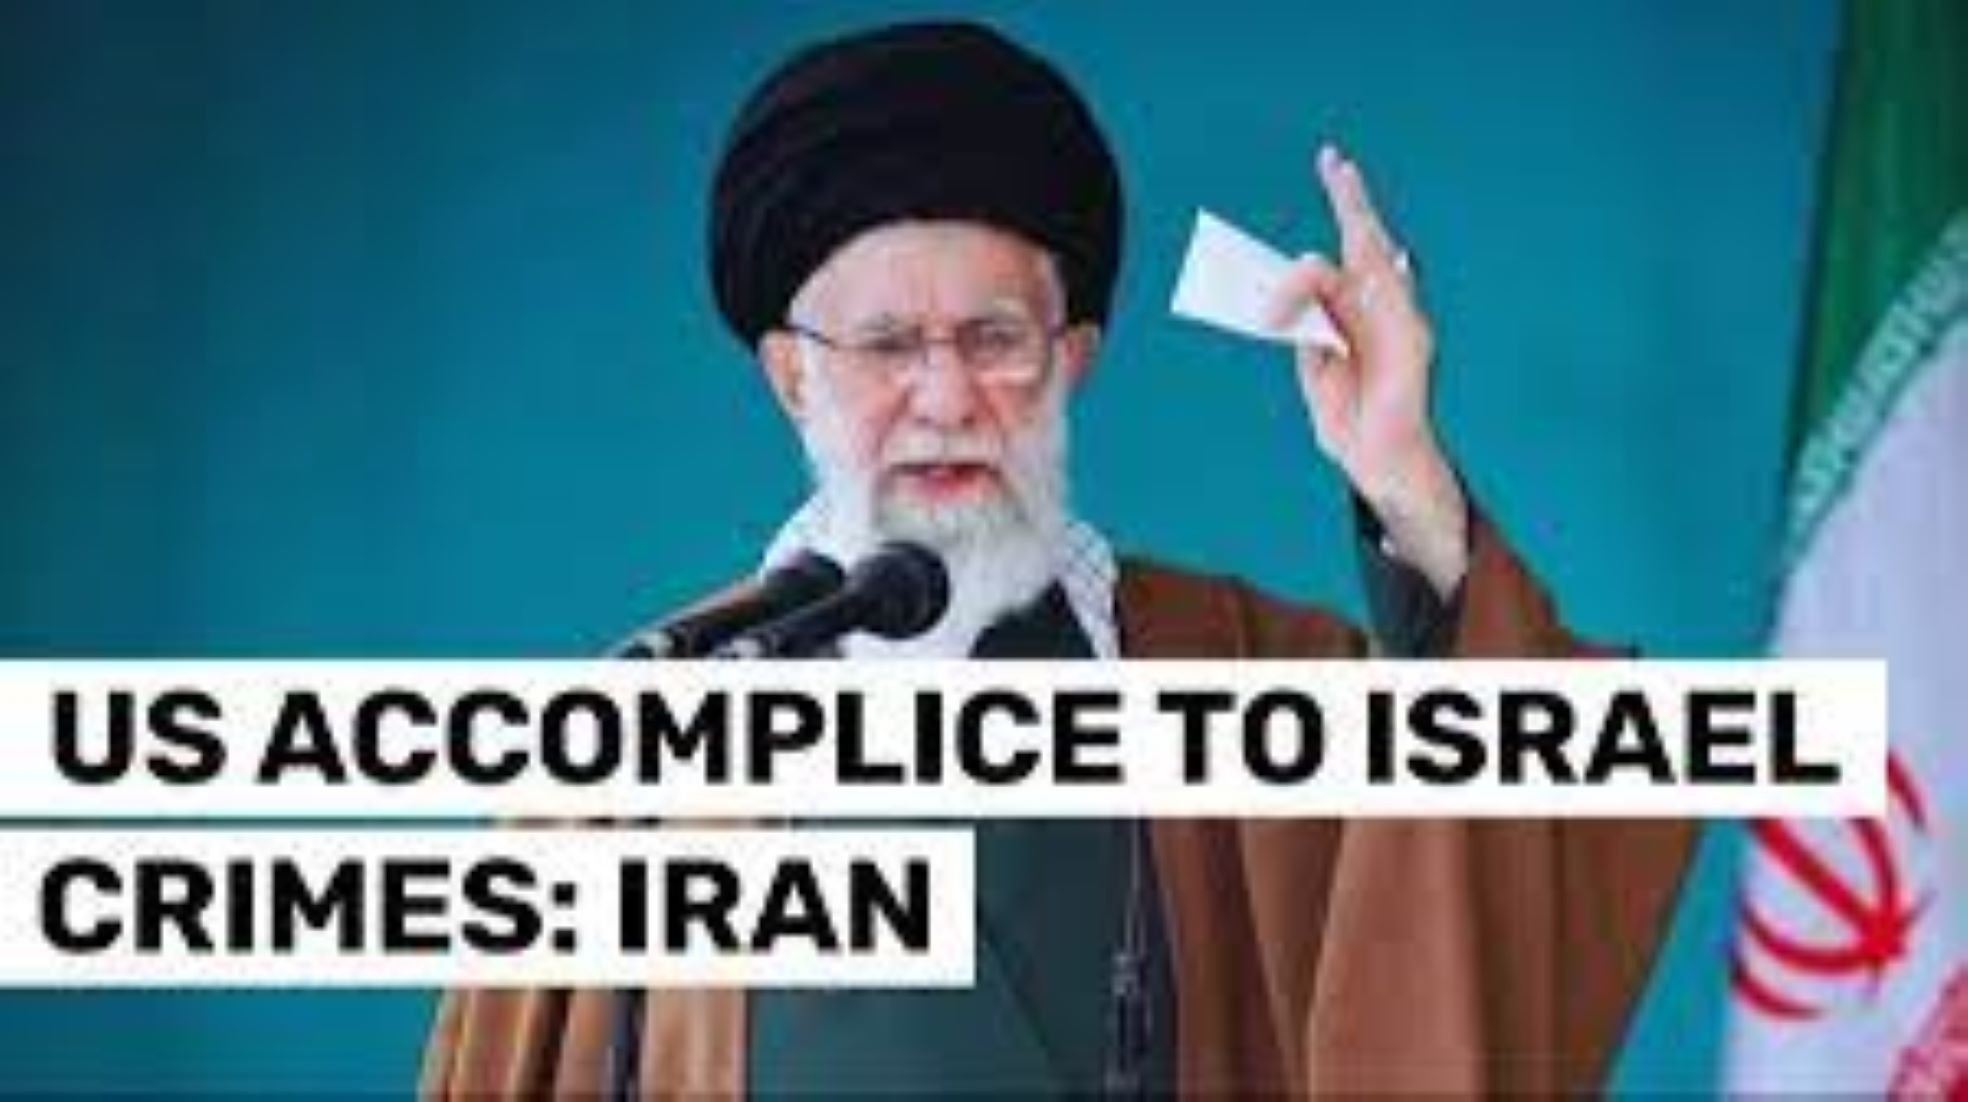 Iran’s Top Leader Says U.S. “Accomplice” Of Israel’s “Crimes” In Gaza